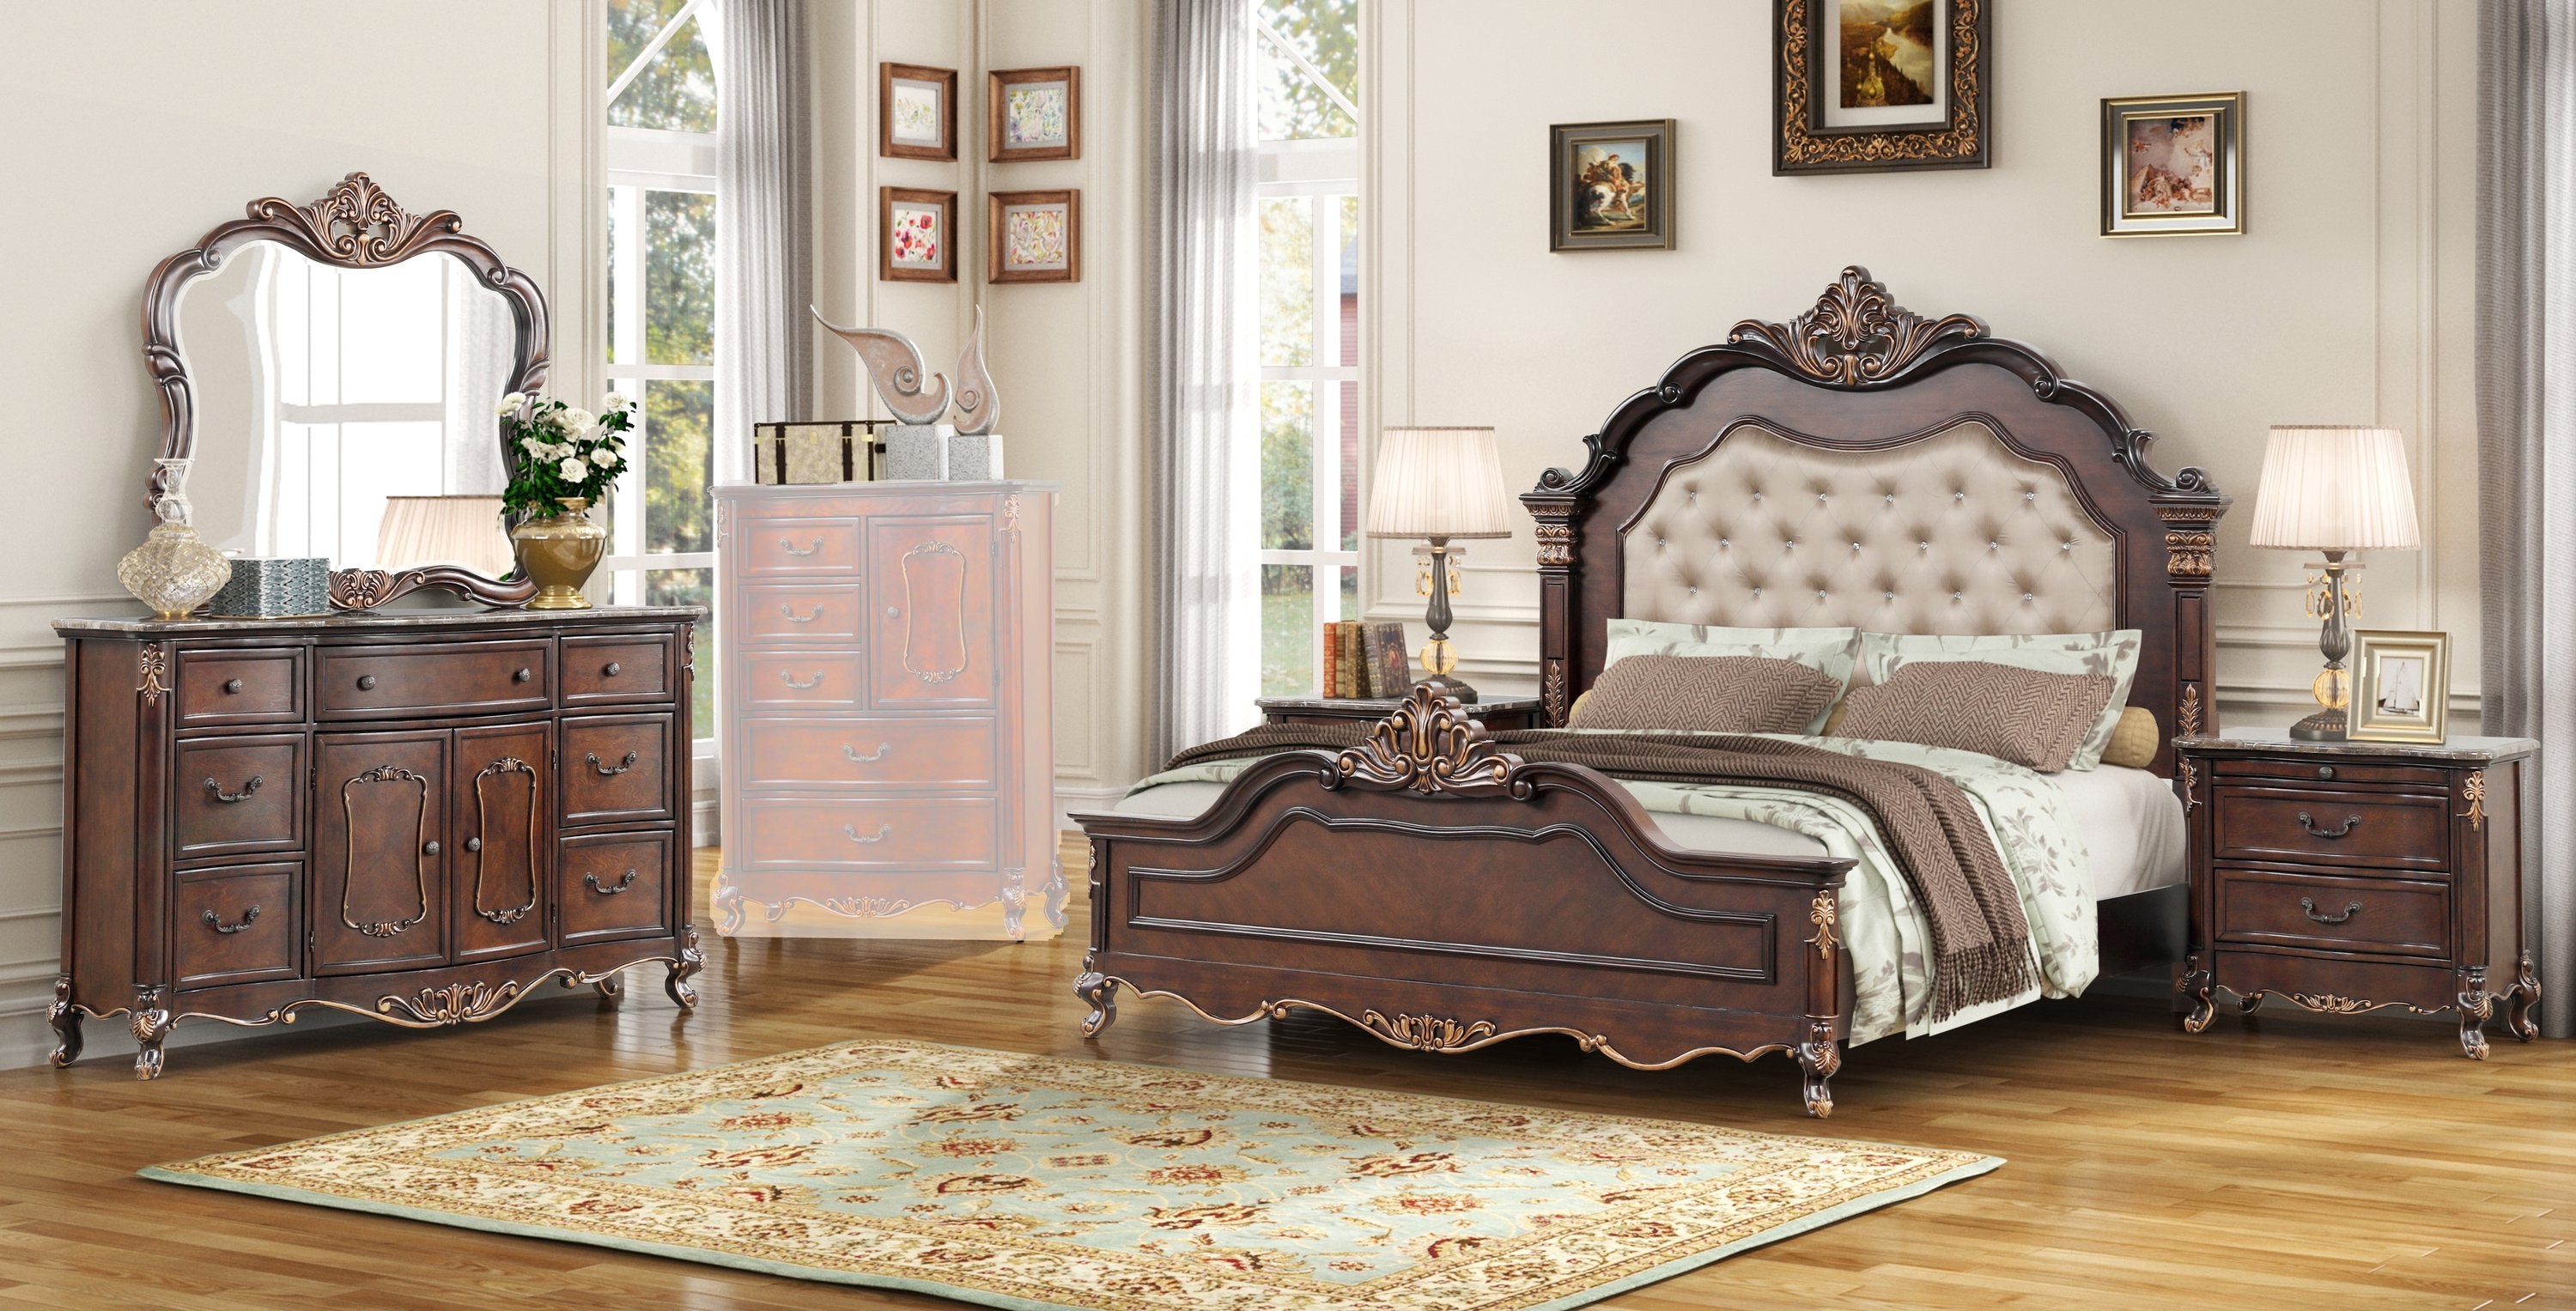 Adira Cherry 4pc Bedroom Set with King Bed